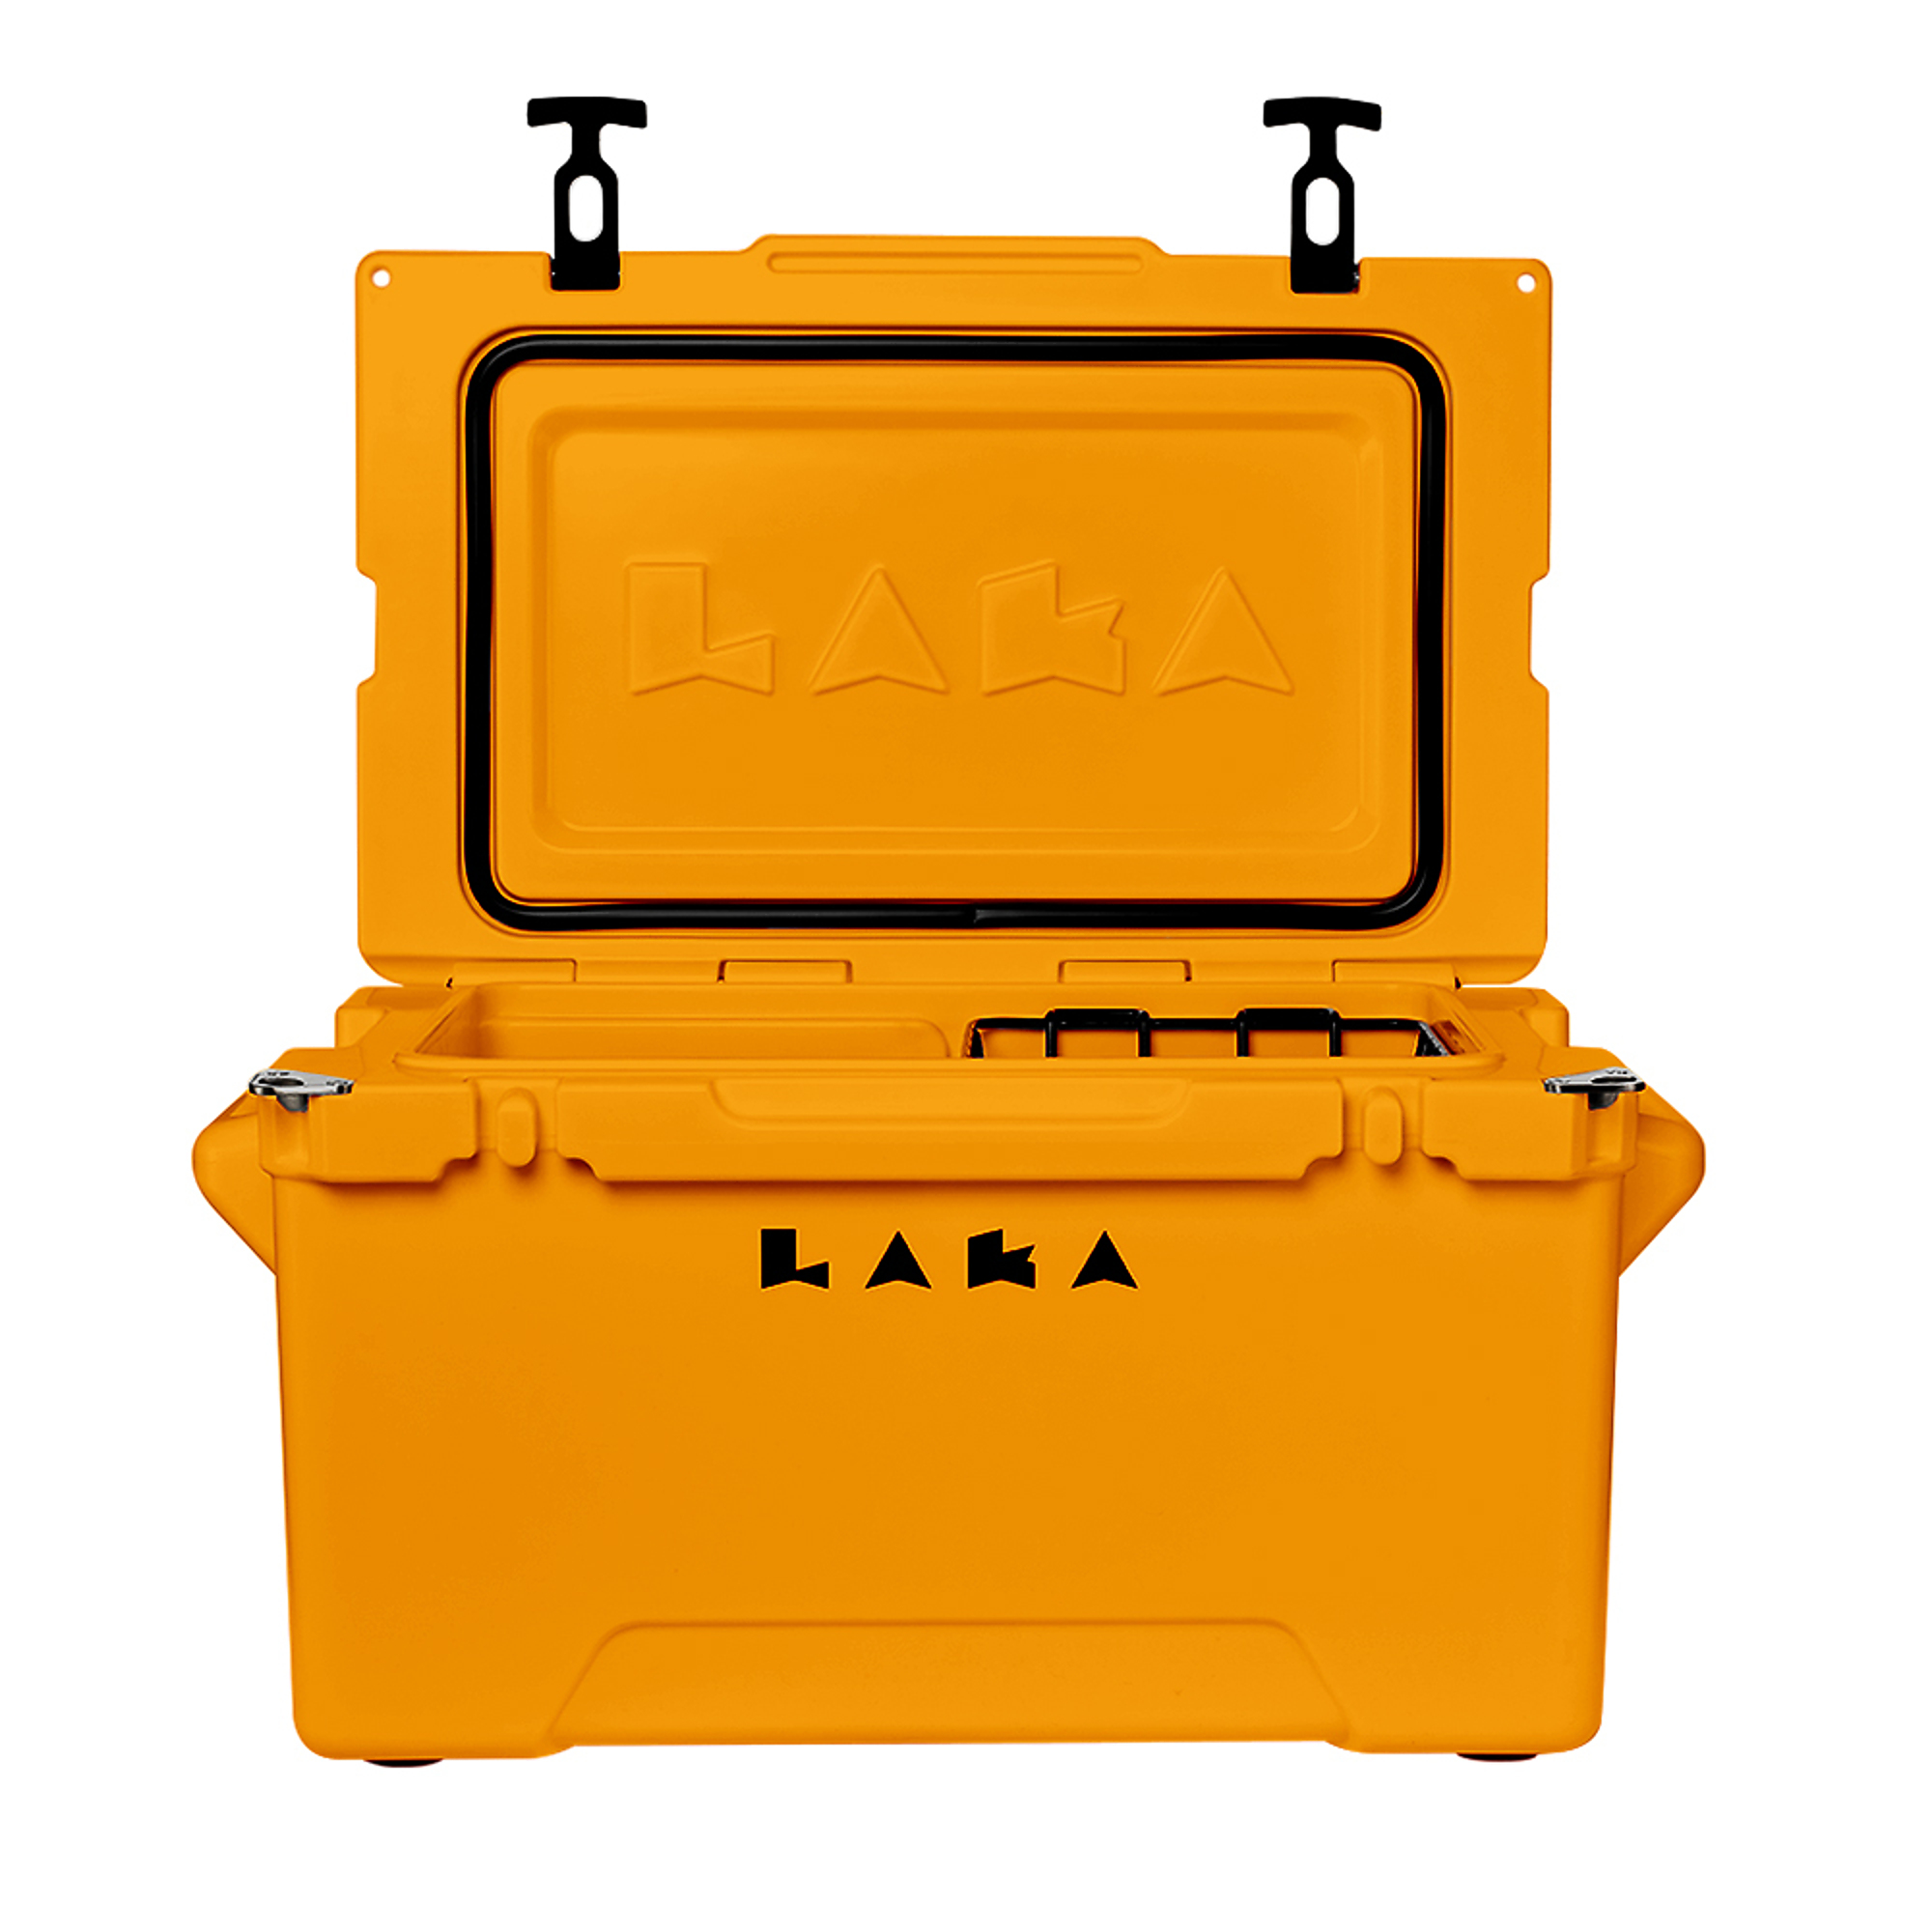 LAKA Cooler, 45 Quart Cooler - Orange, Capacity 11.25 Gal, Model 1068